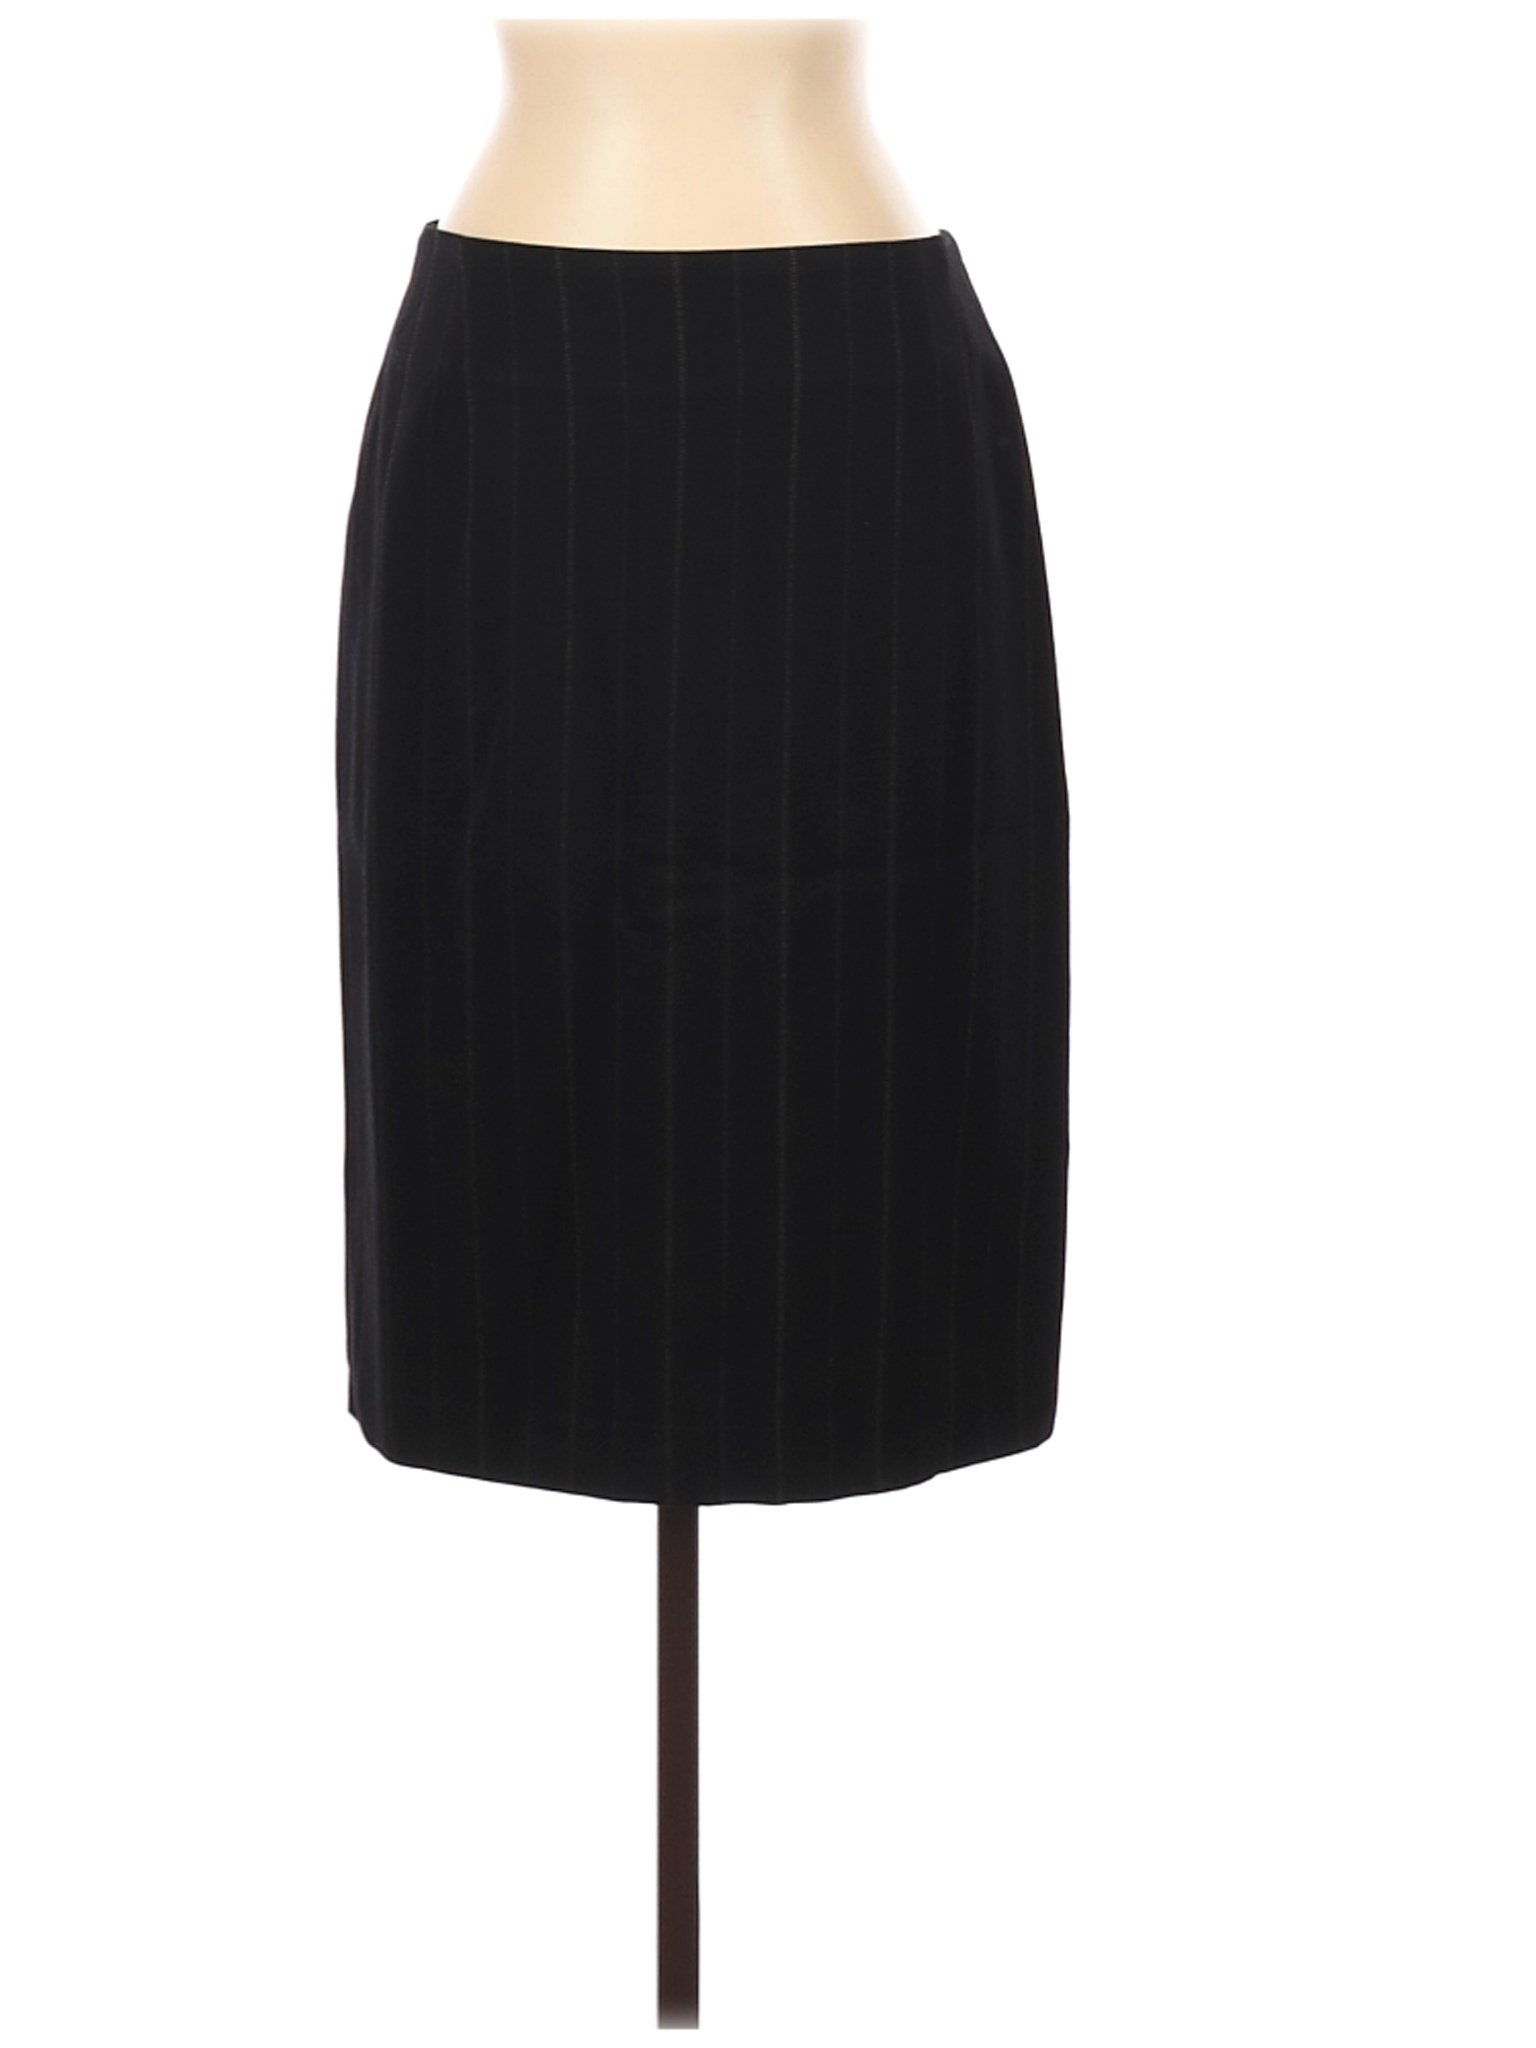 Adrienne Vittadini Women Black Casual Skirt 10 | eBay